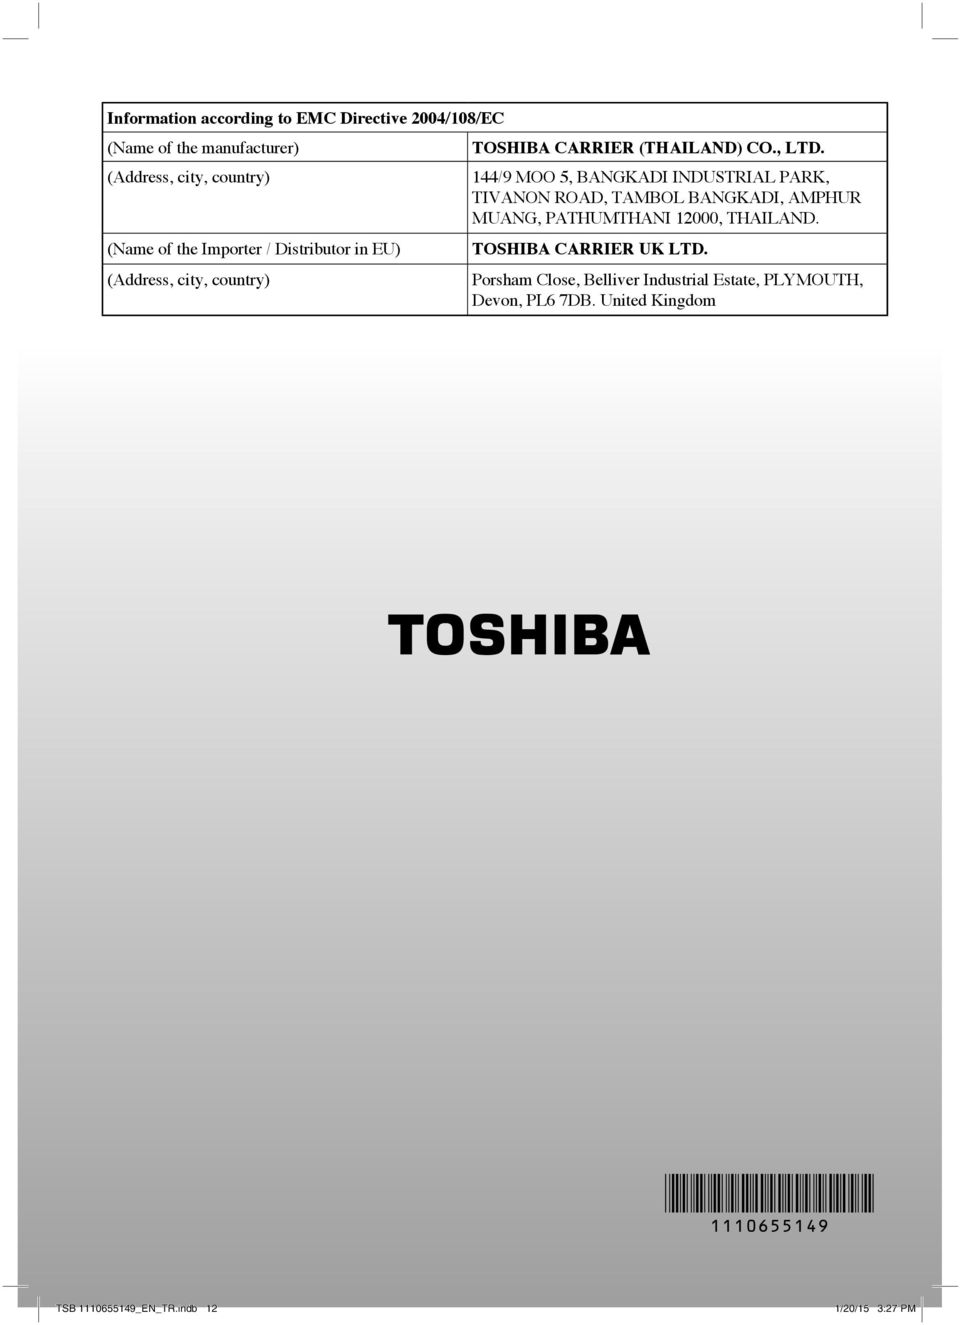 PATHUMTHANI 000 THAILAND. (Name of the Importer / Distributor in EU) TOSHIBA CARRIER UK LTD.